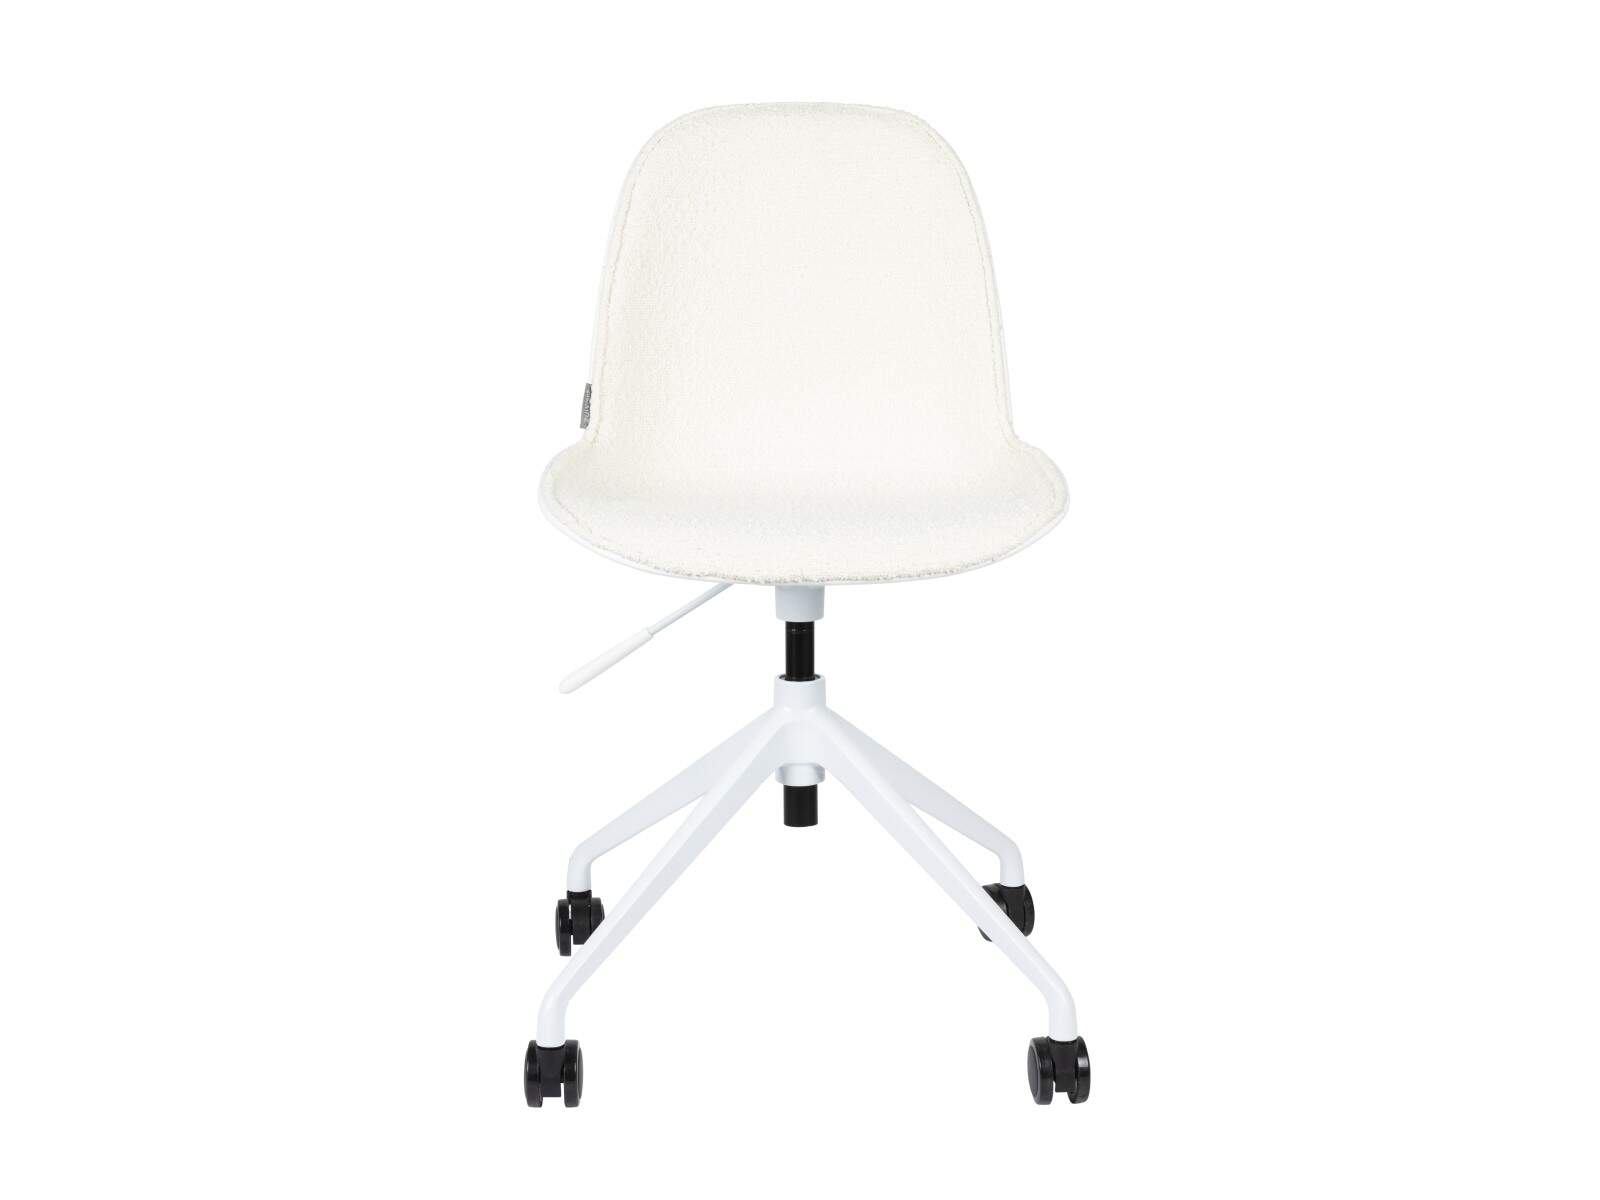 Zuiver Albert Kuip Office chair white // Zuiver Albert Kuip Office irodai szék feher